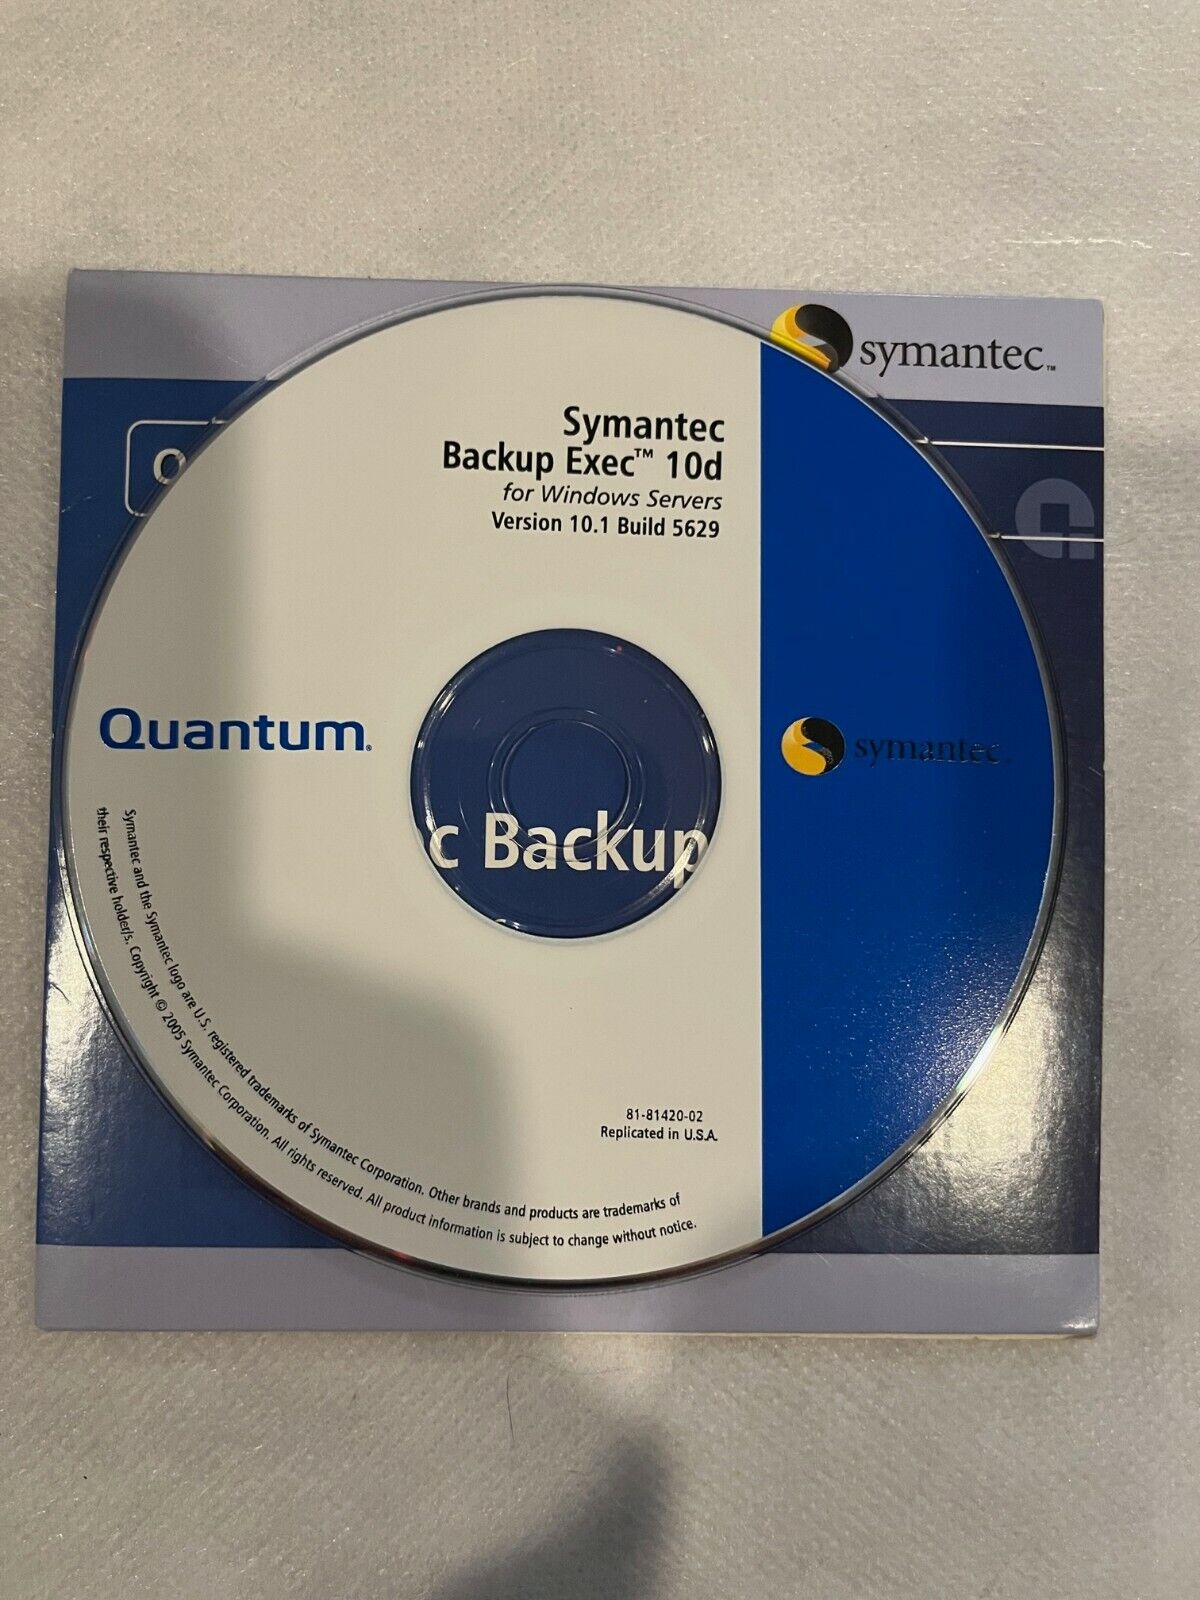 Quantum Software Kit - Symantec Backup Exec 10d, for Windows Servers with Key